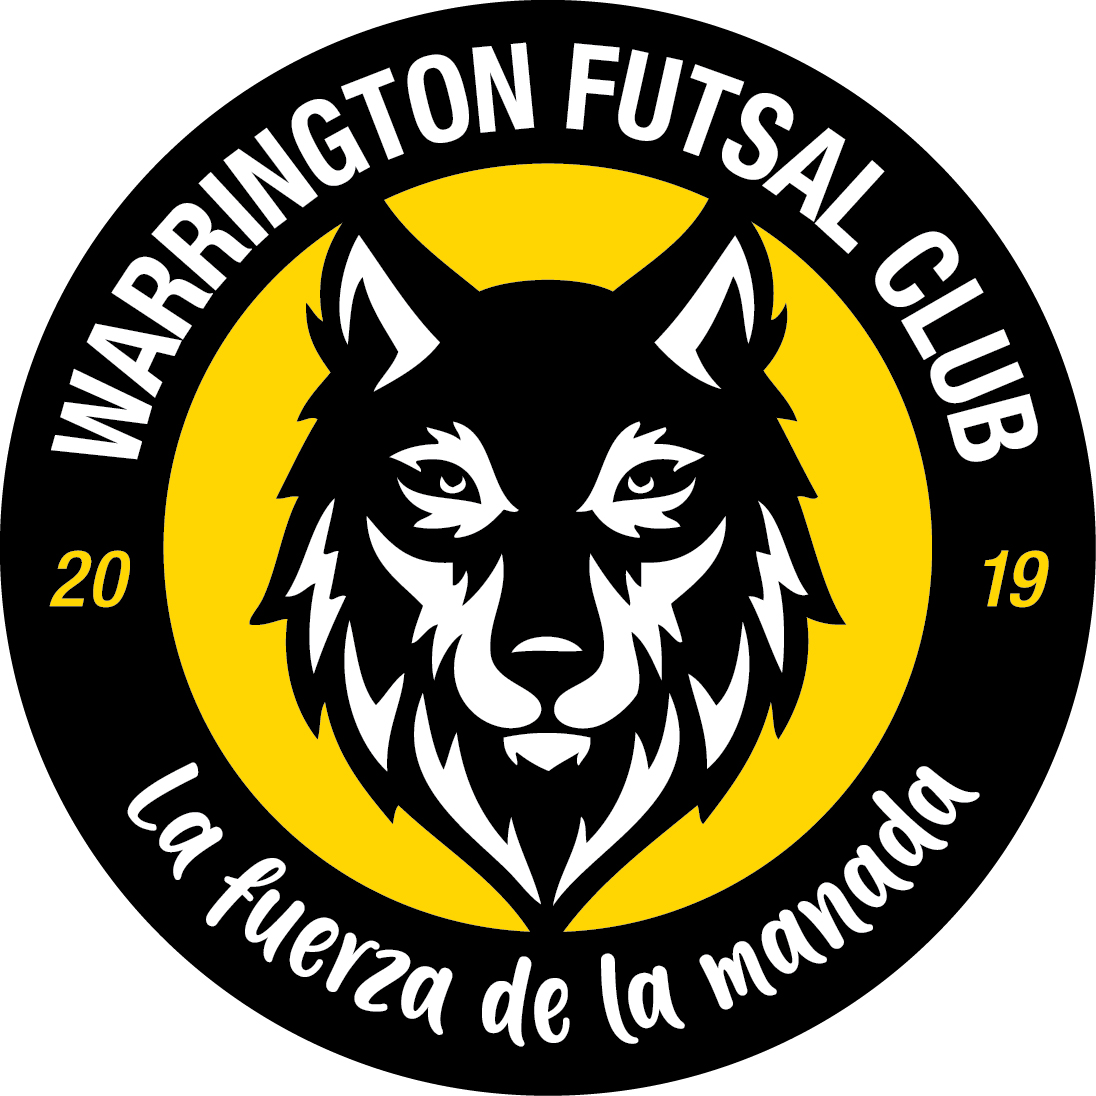 Warrington Futsal Club